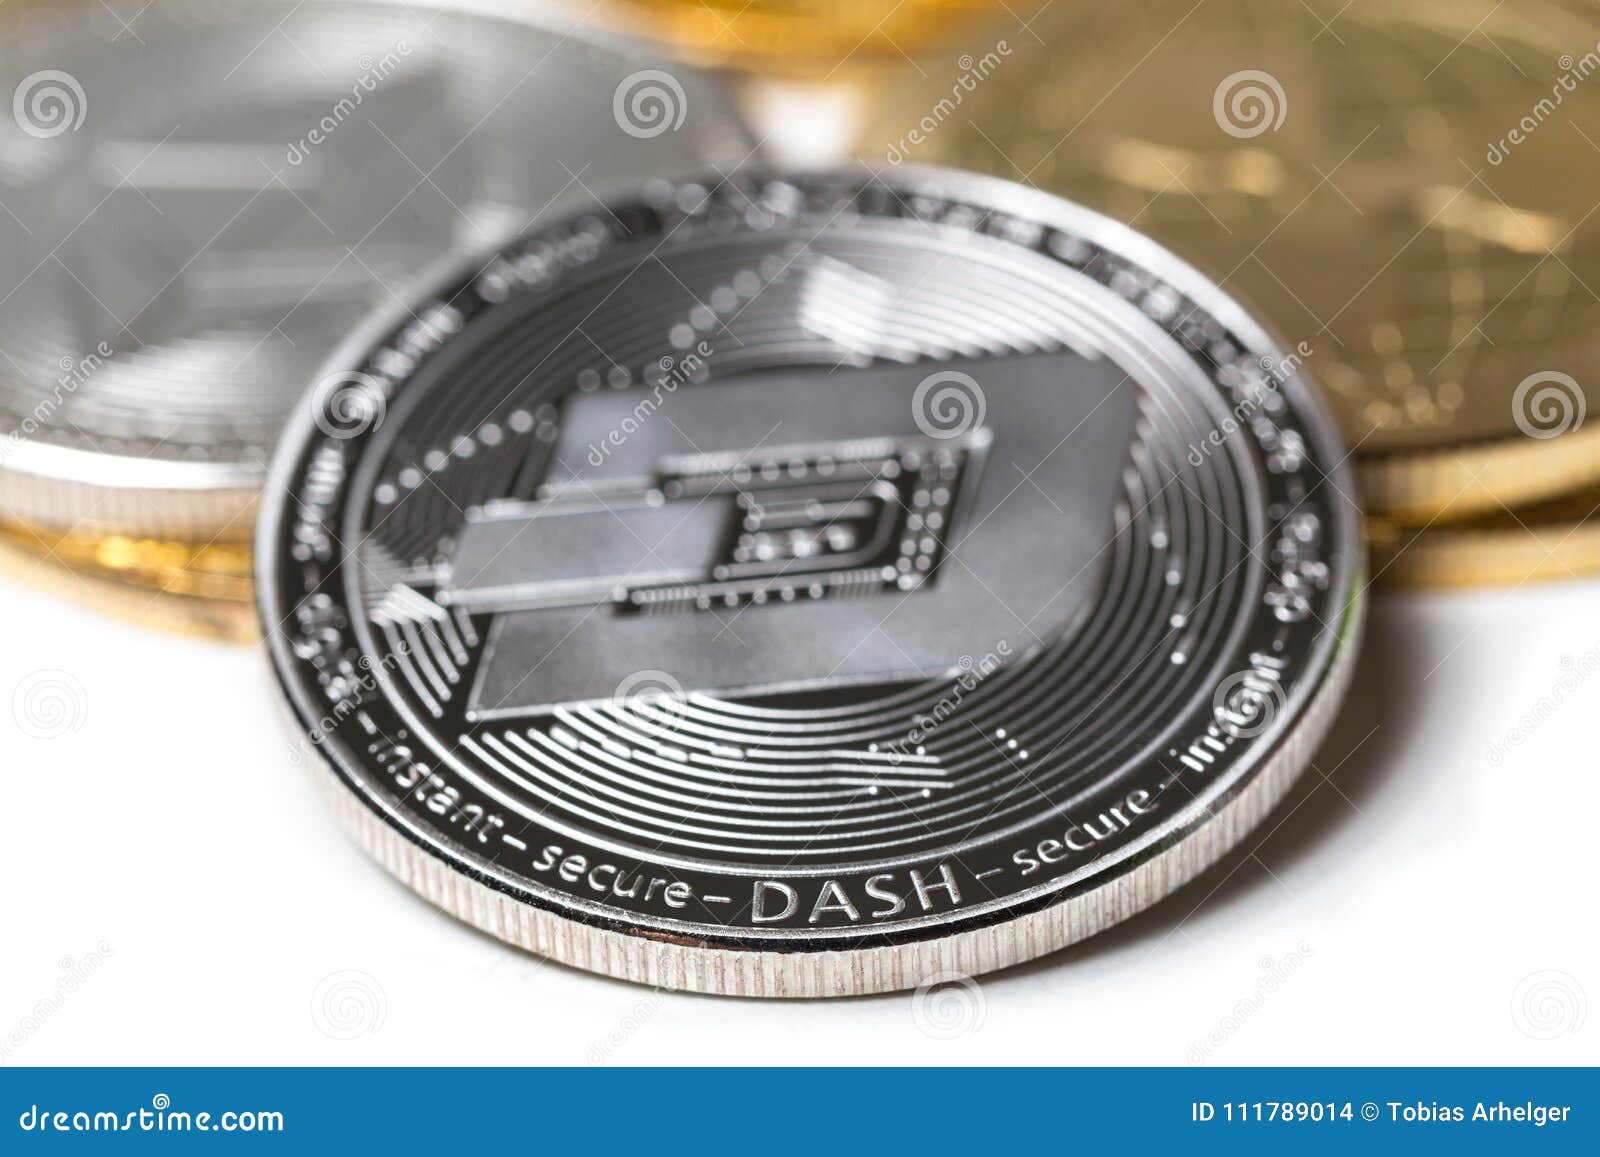 will dash coin survive